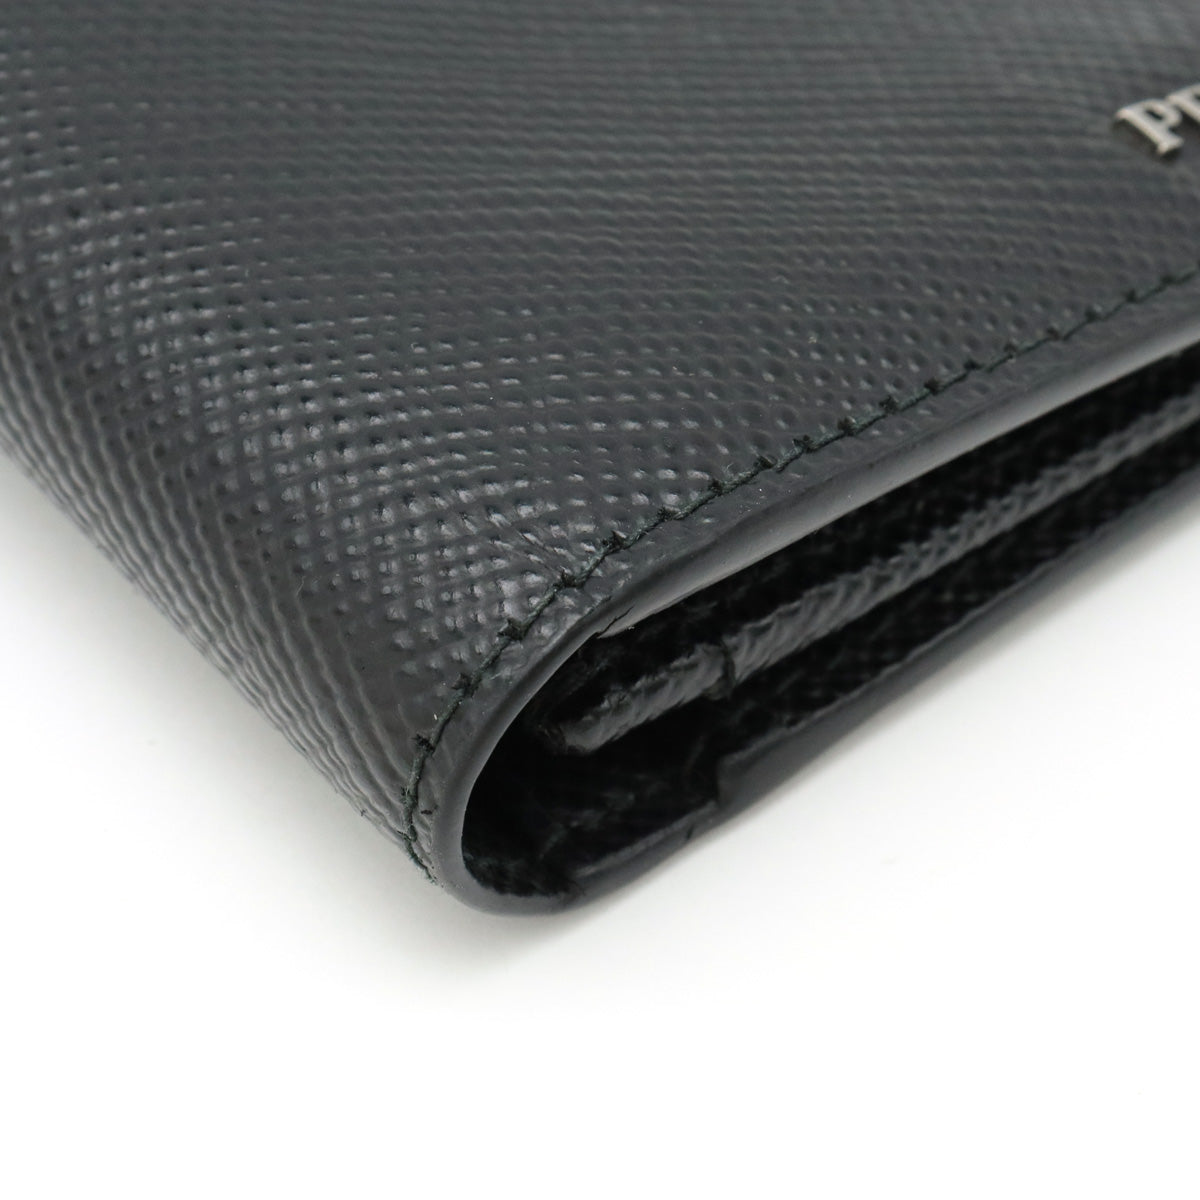 PRADA PRADA SAFFIANO CUIR C Double Folded Wallet Two Folded Wallet Sapphire Leather NERO Black Silver  Domestic Boutique Purchases 2MV836